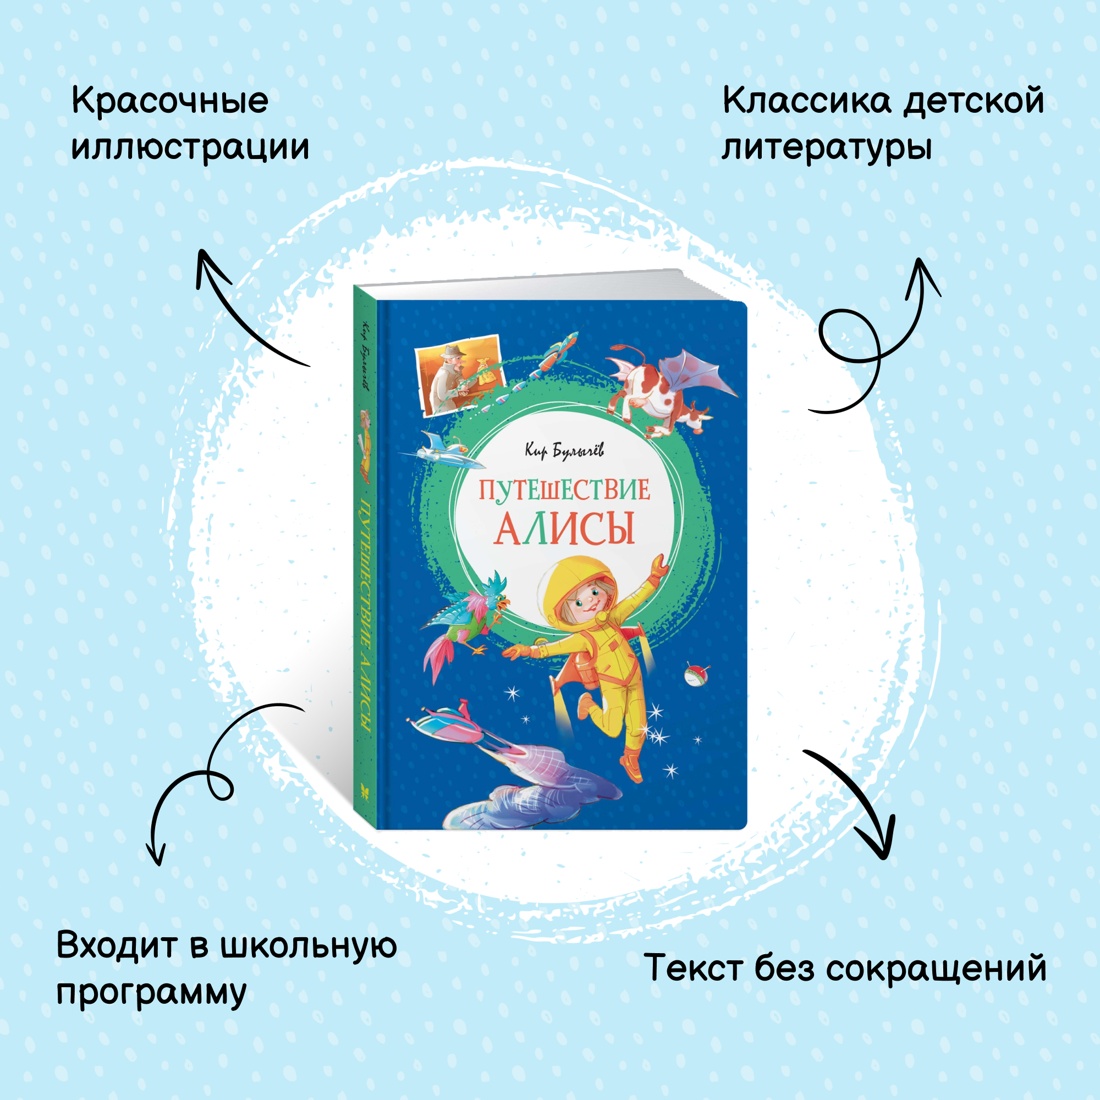 Промо материал к книге "Путешествие Алисы" №0